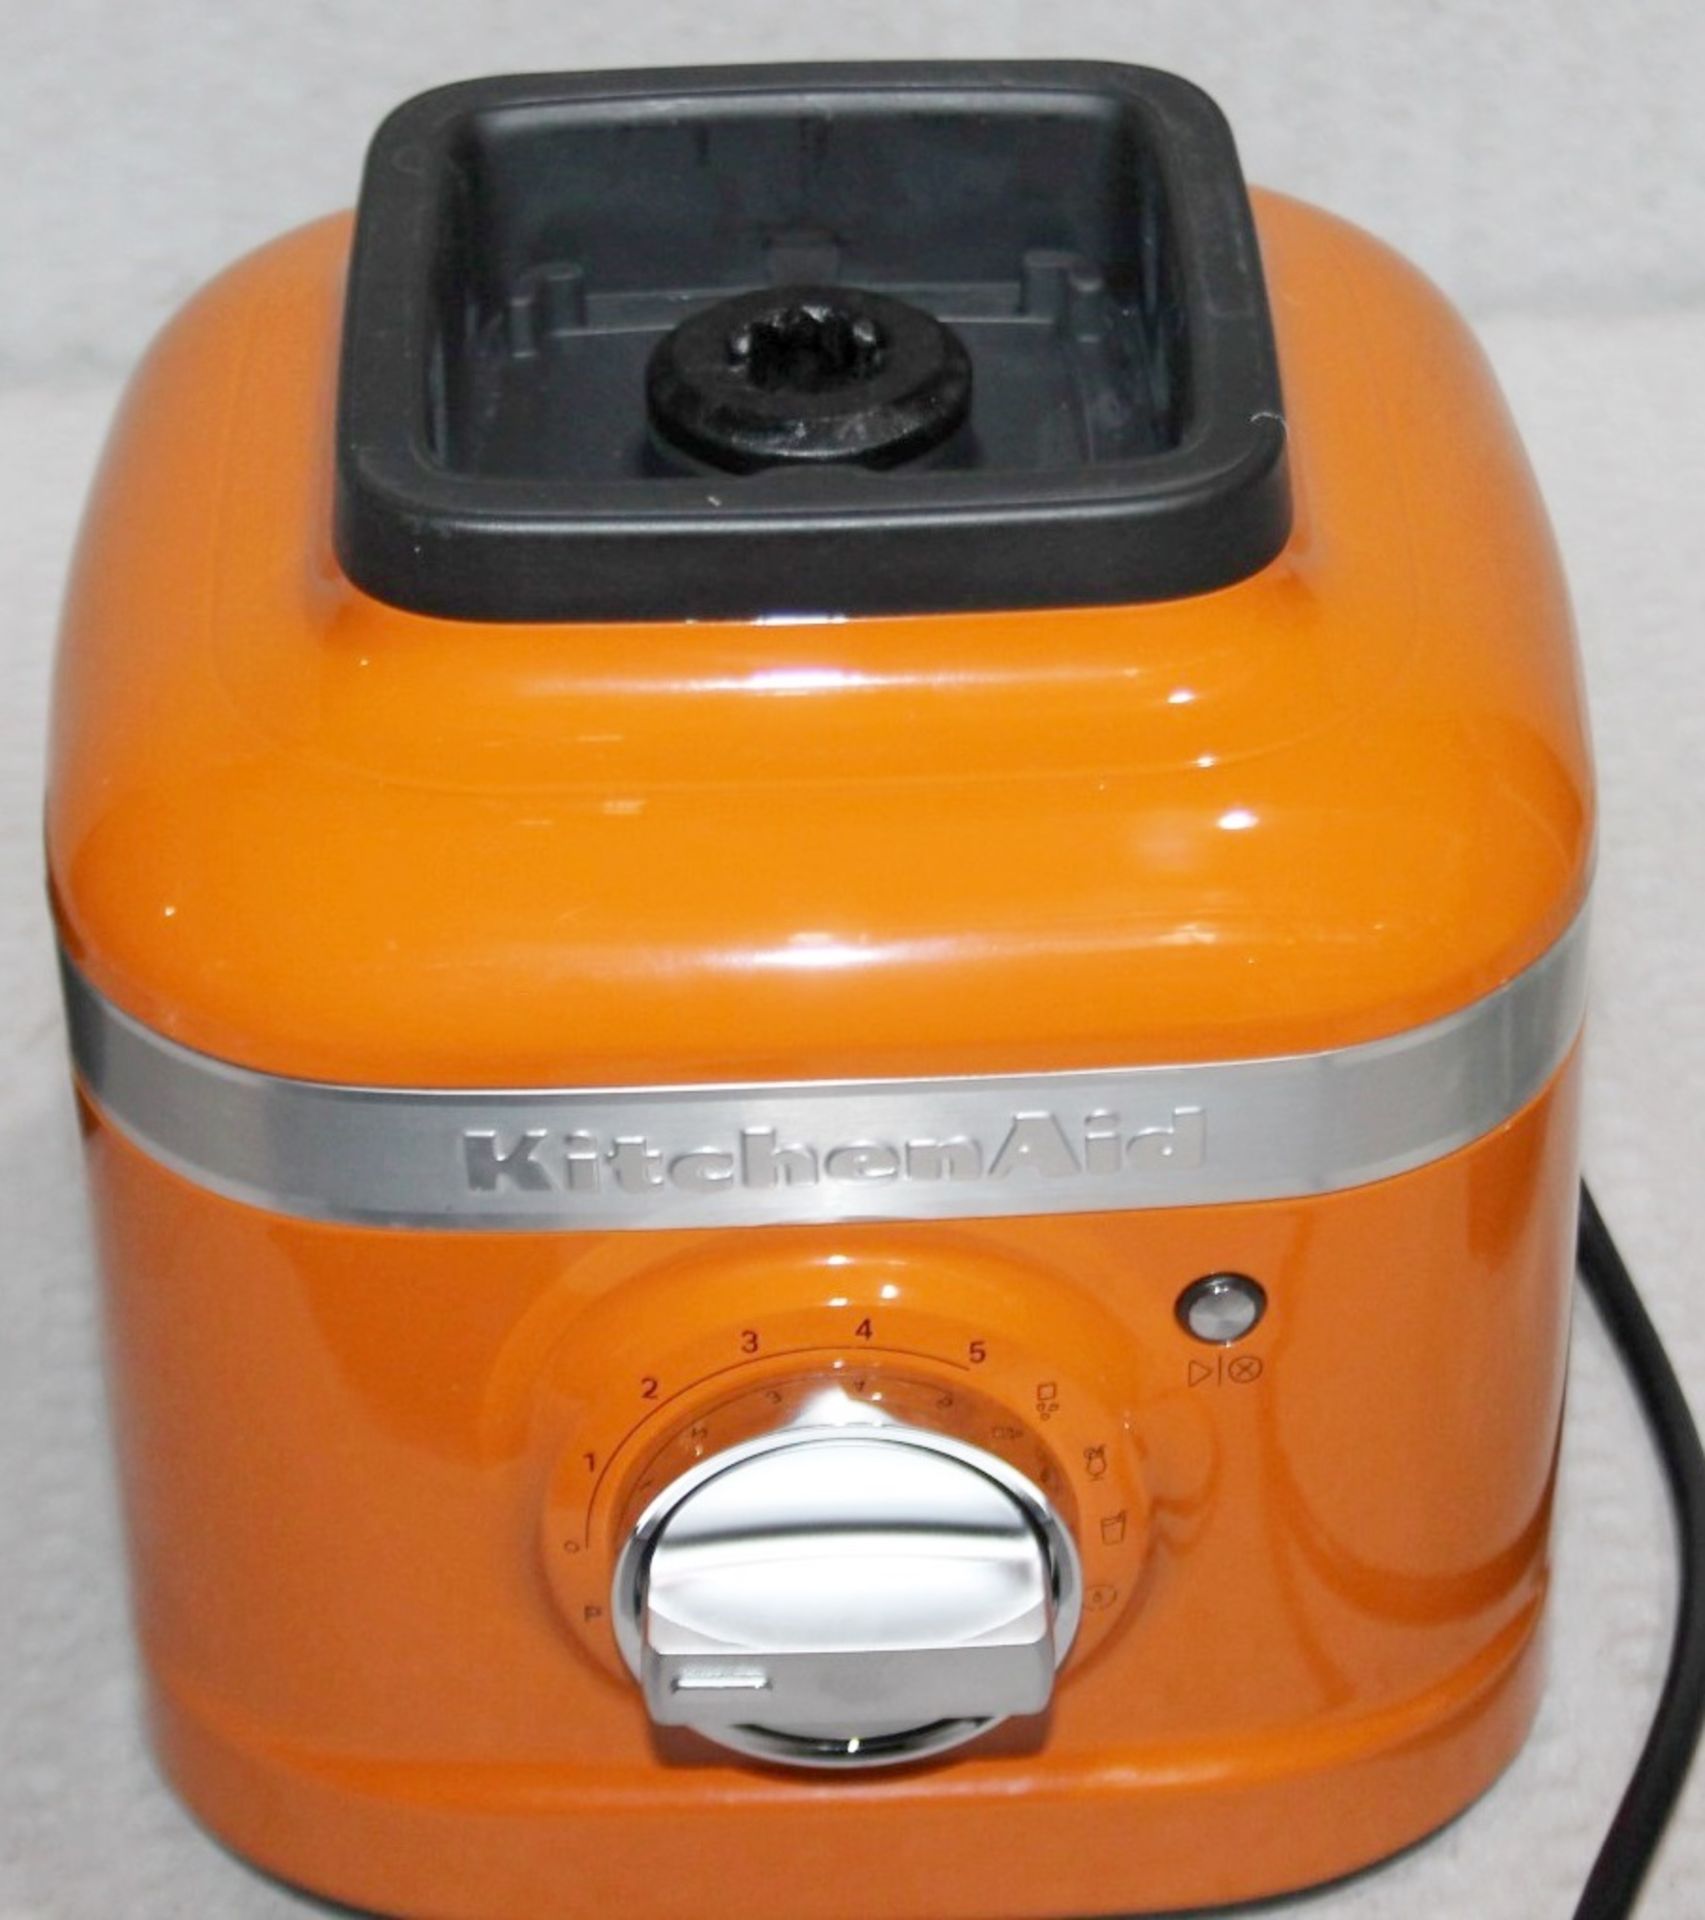 1 x KITCHENAID 'Artisan K400' Professional-level Blender In Honey Orange - Original Price £299.00 - Image 4 of 10